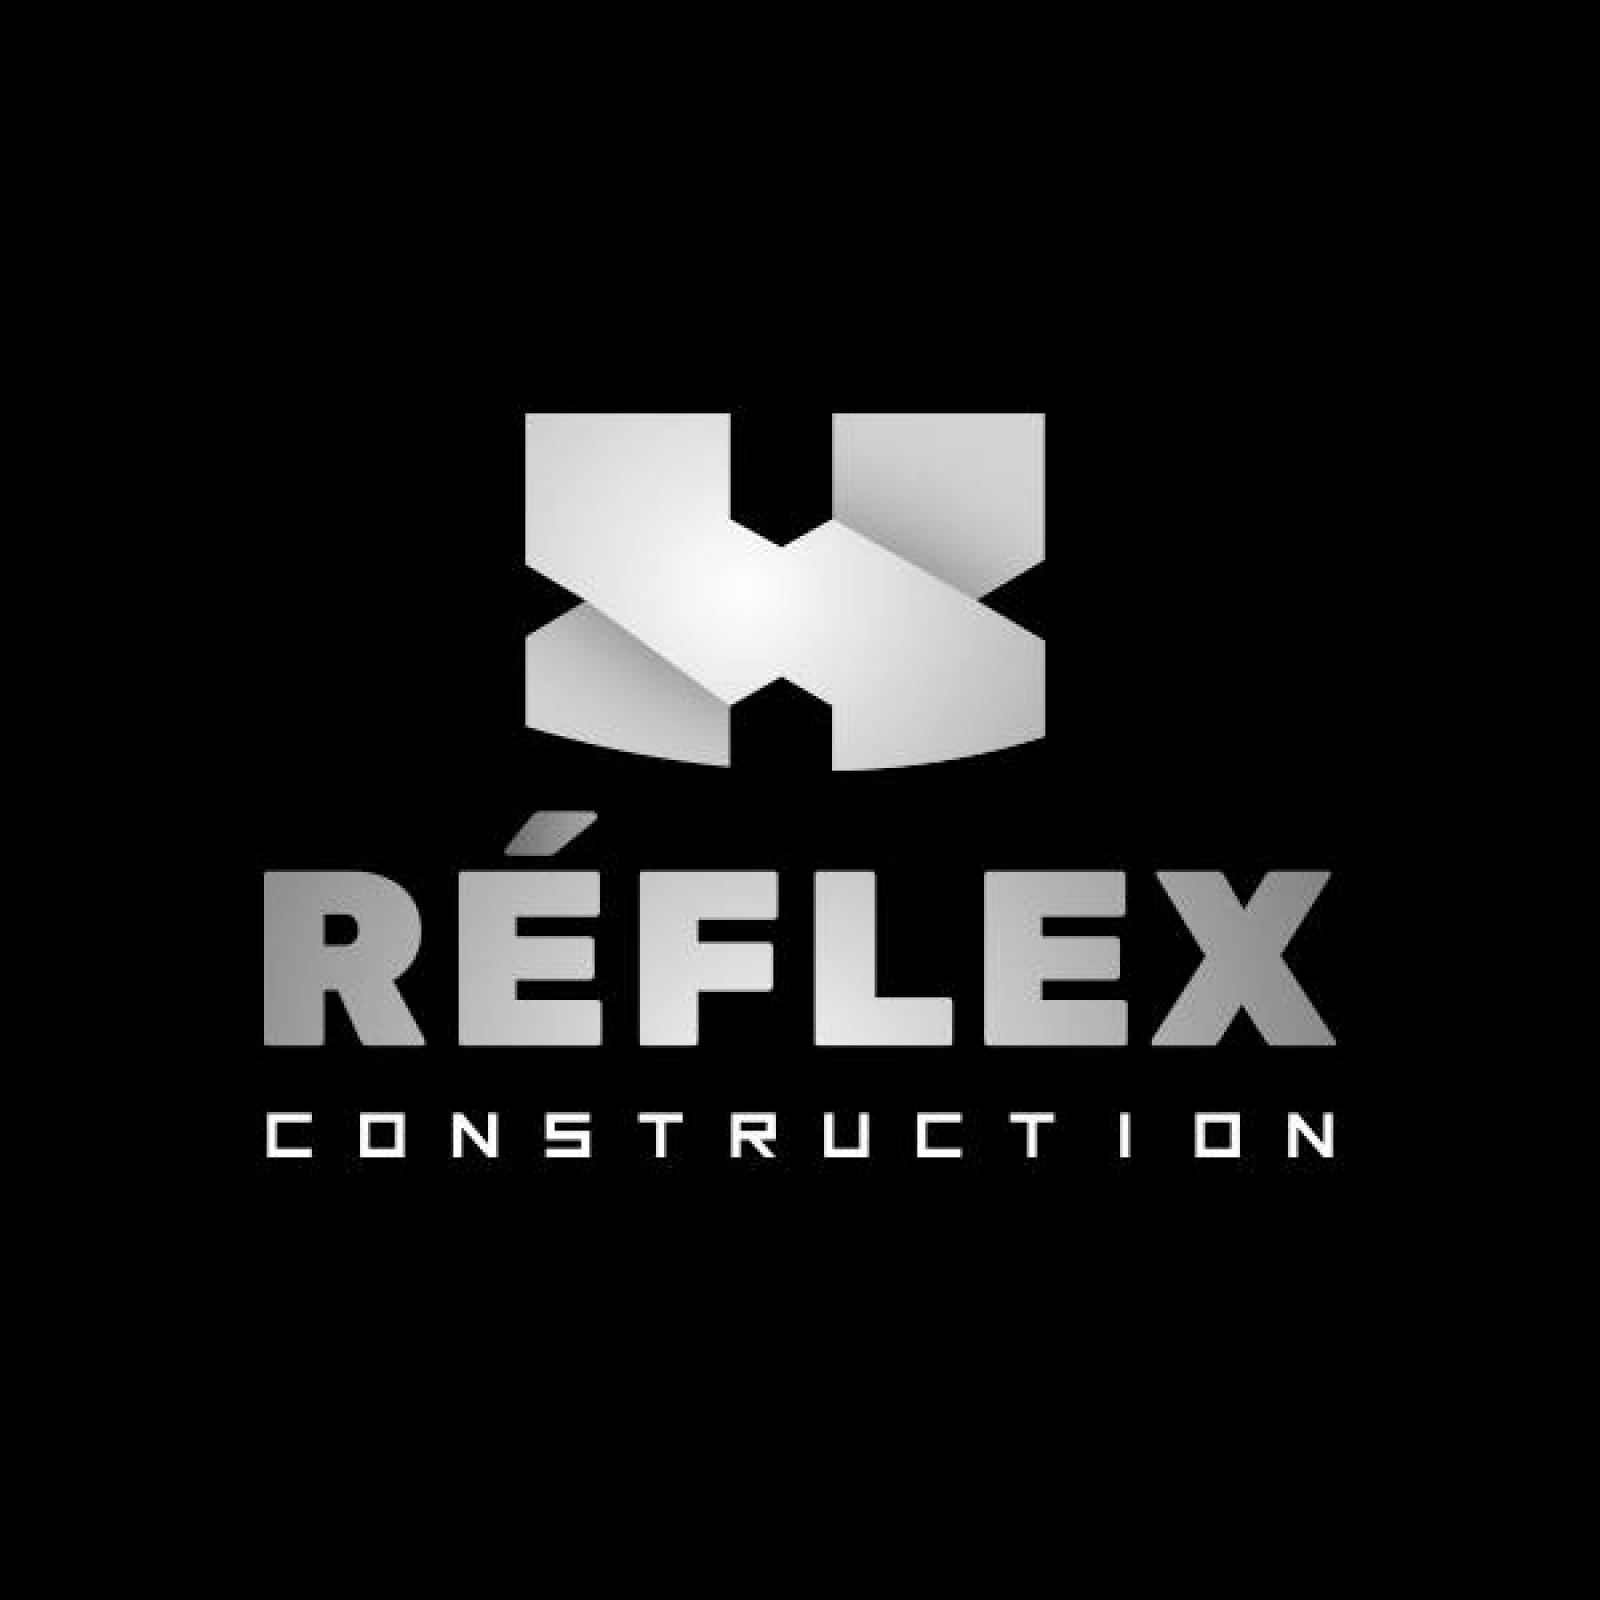 Reflex Construction rénovation Capitale-Nationale Logo